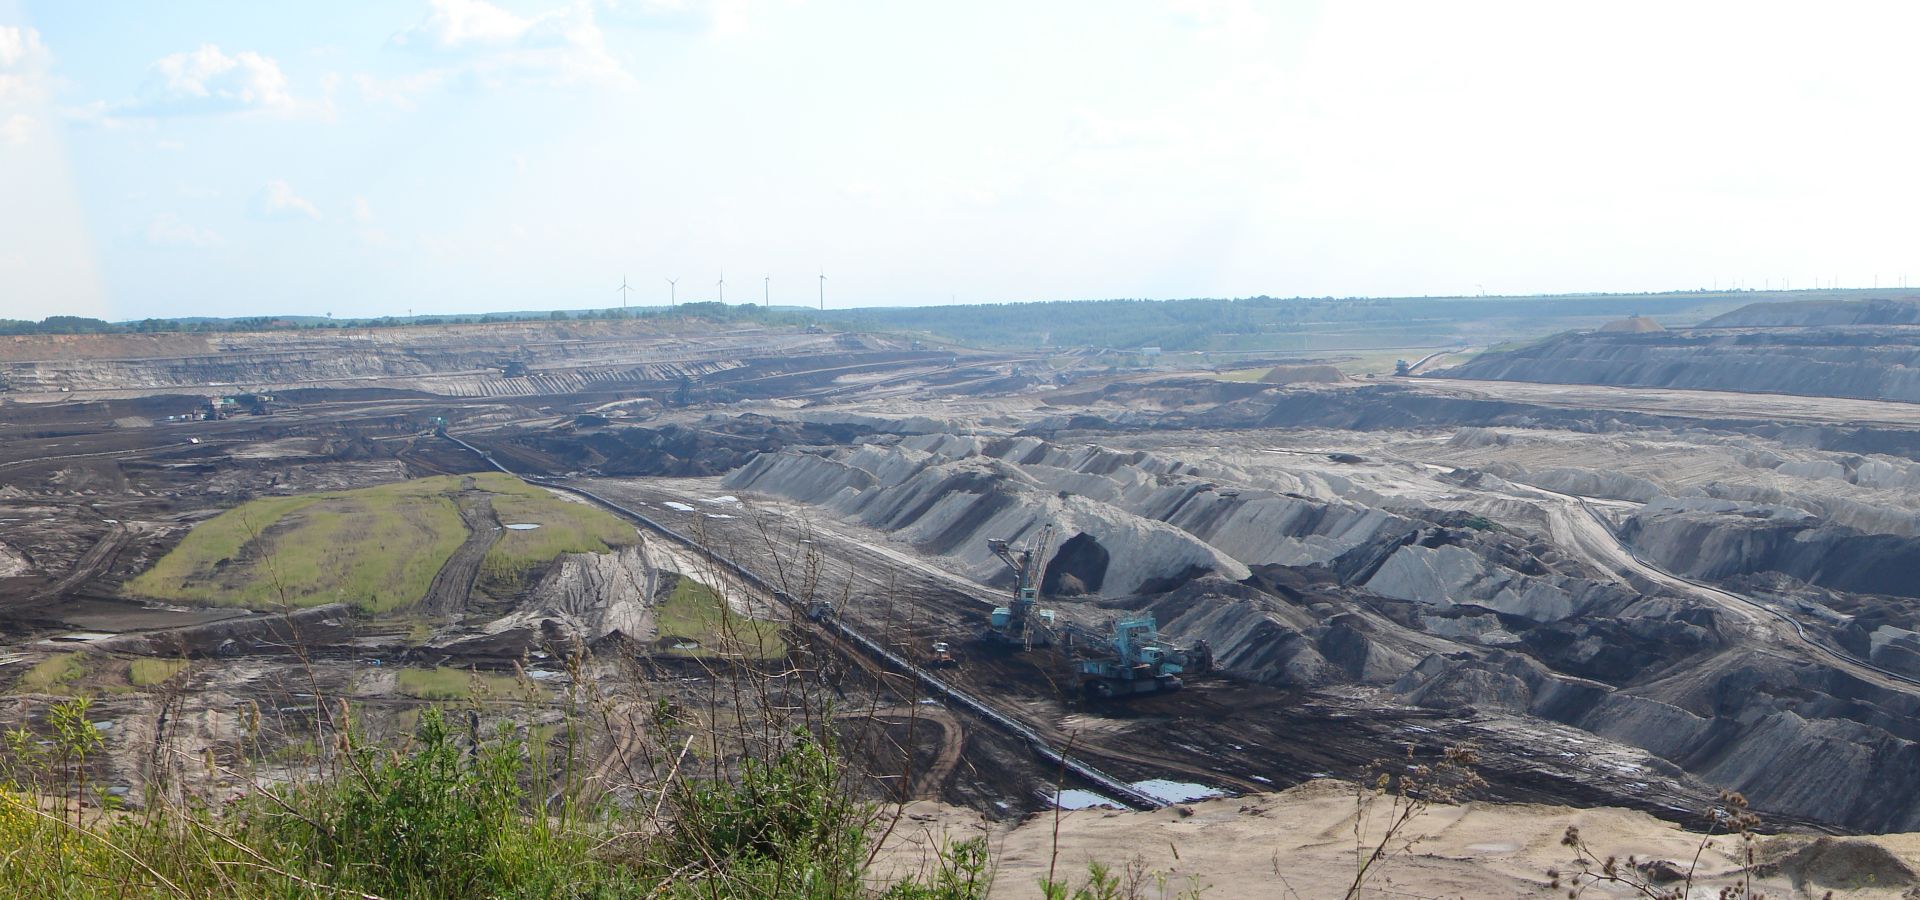 The mining curse haunts lignite towns